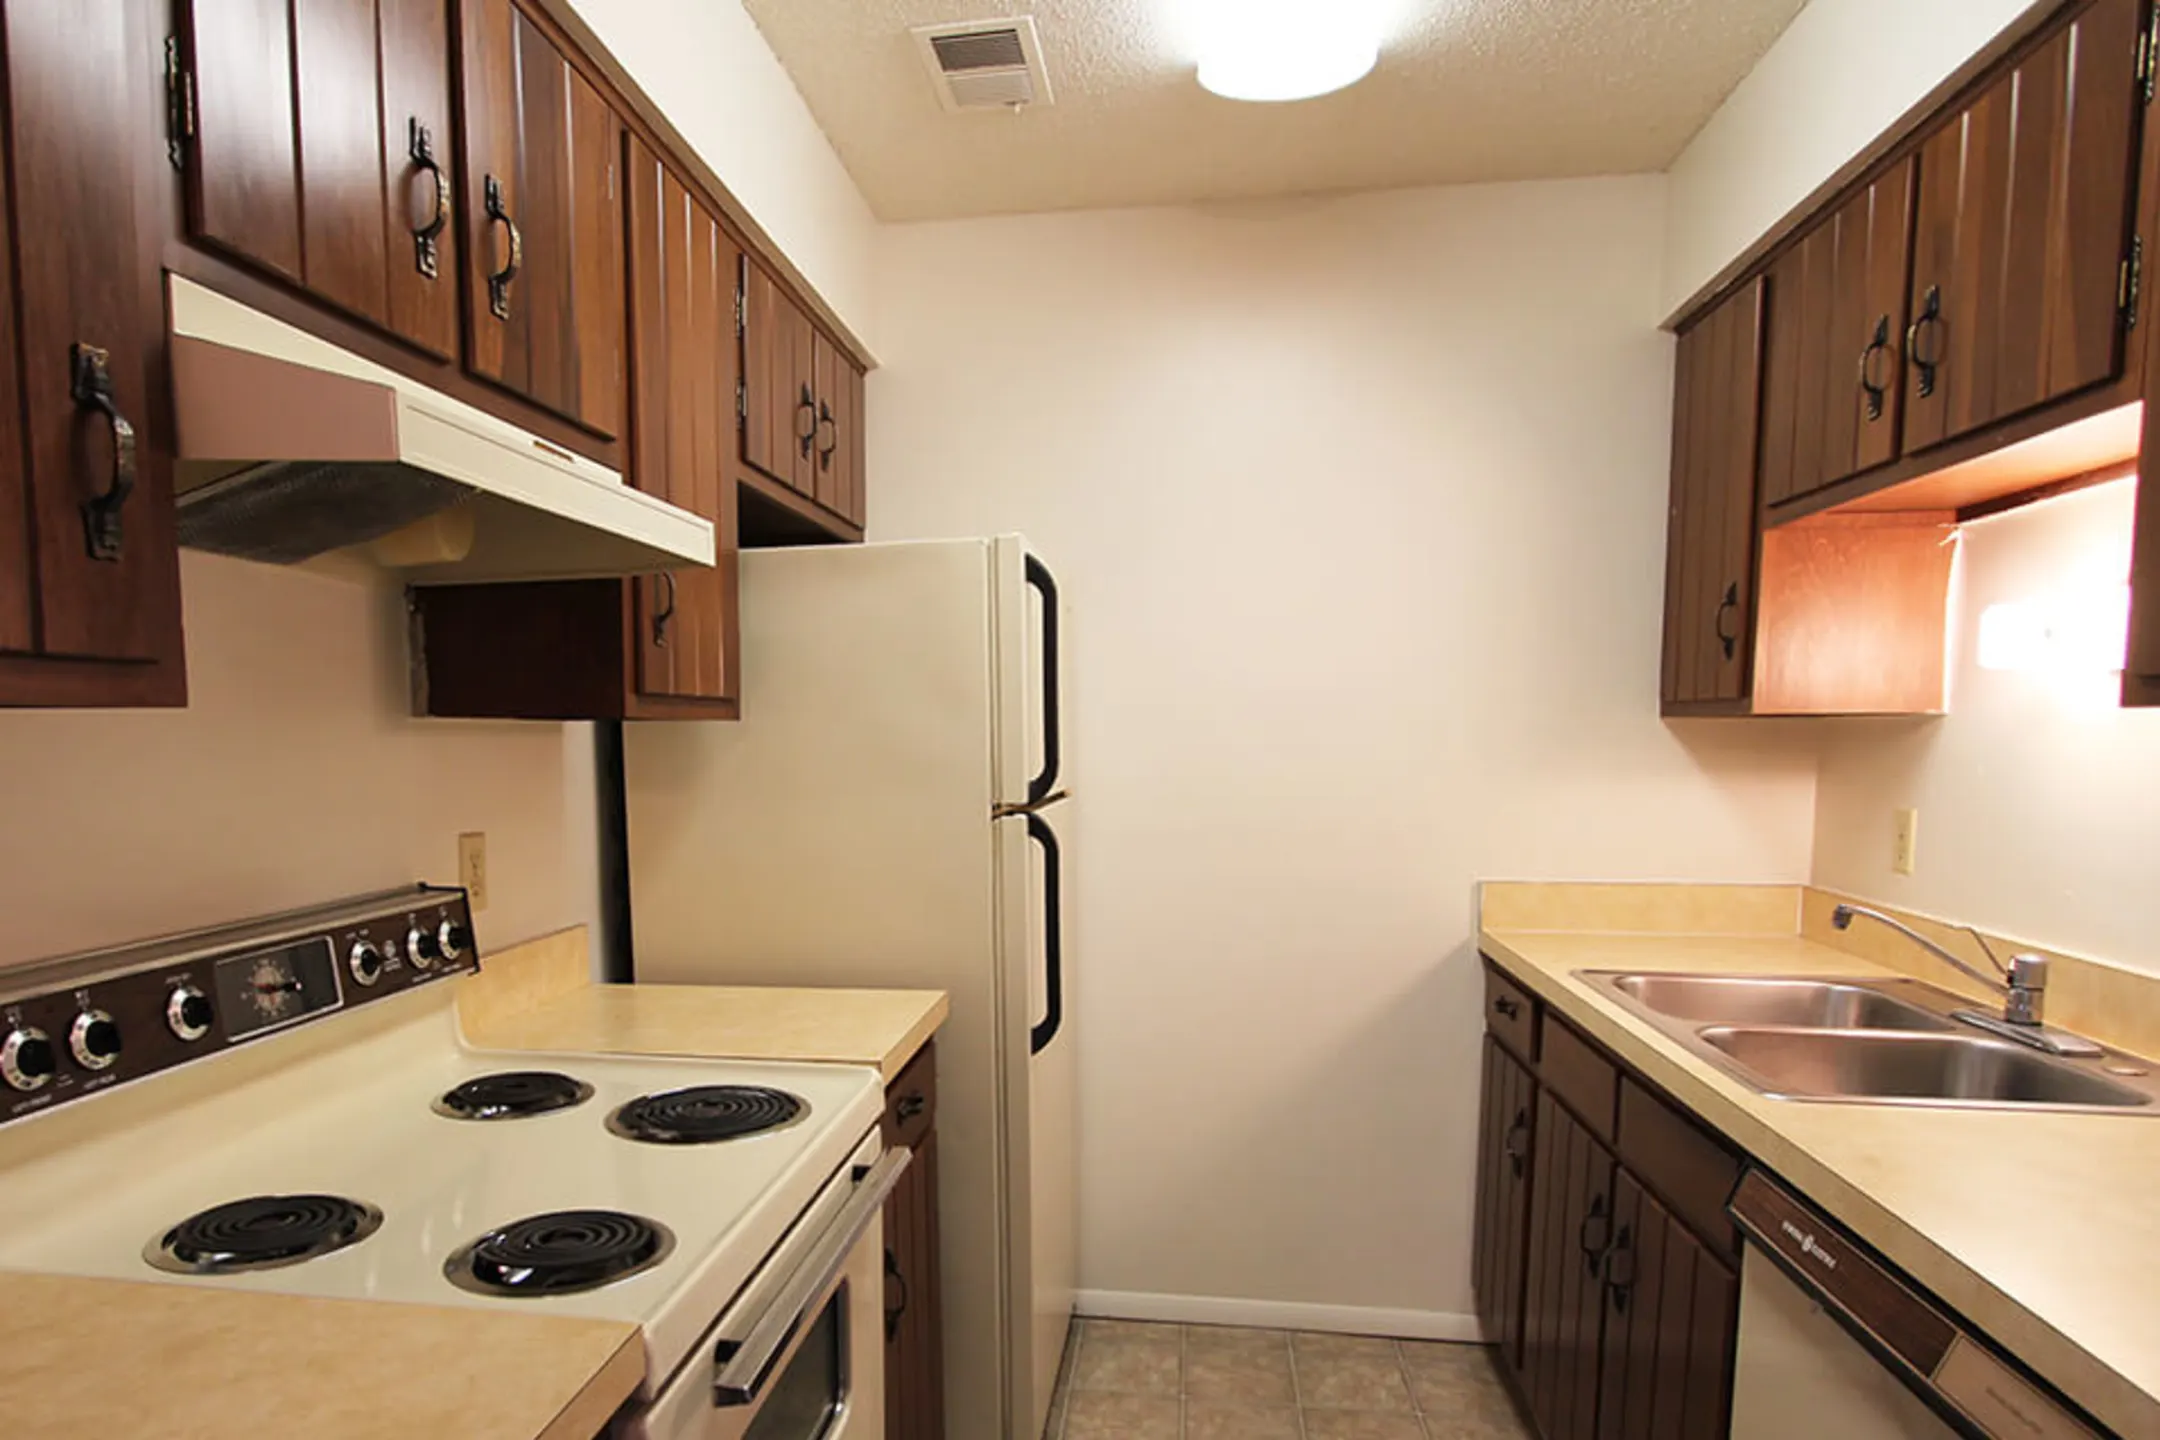 Kitchen - Addison Place Apartments of Evansville - Evansville, IN